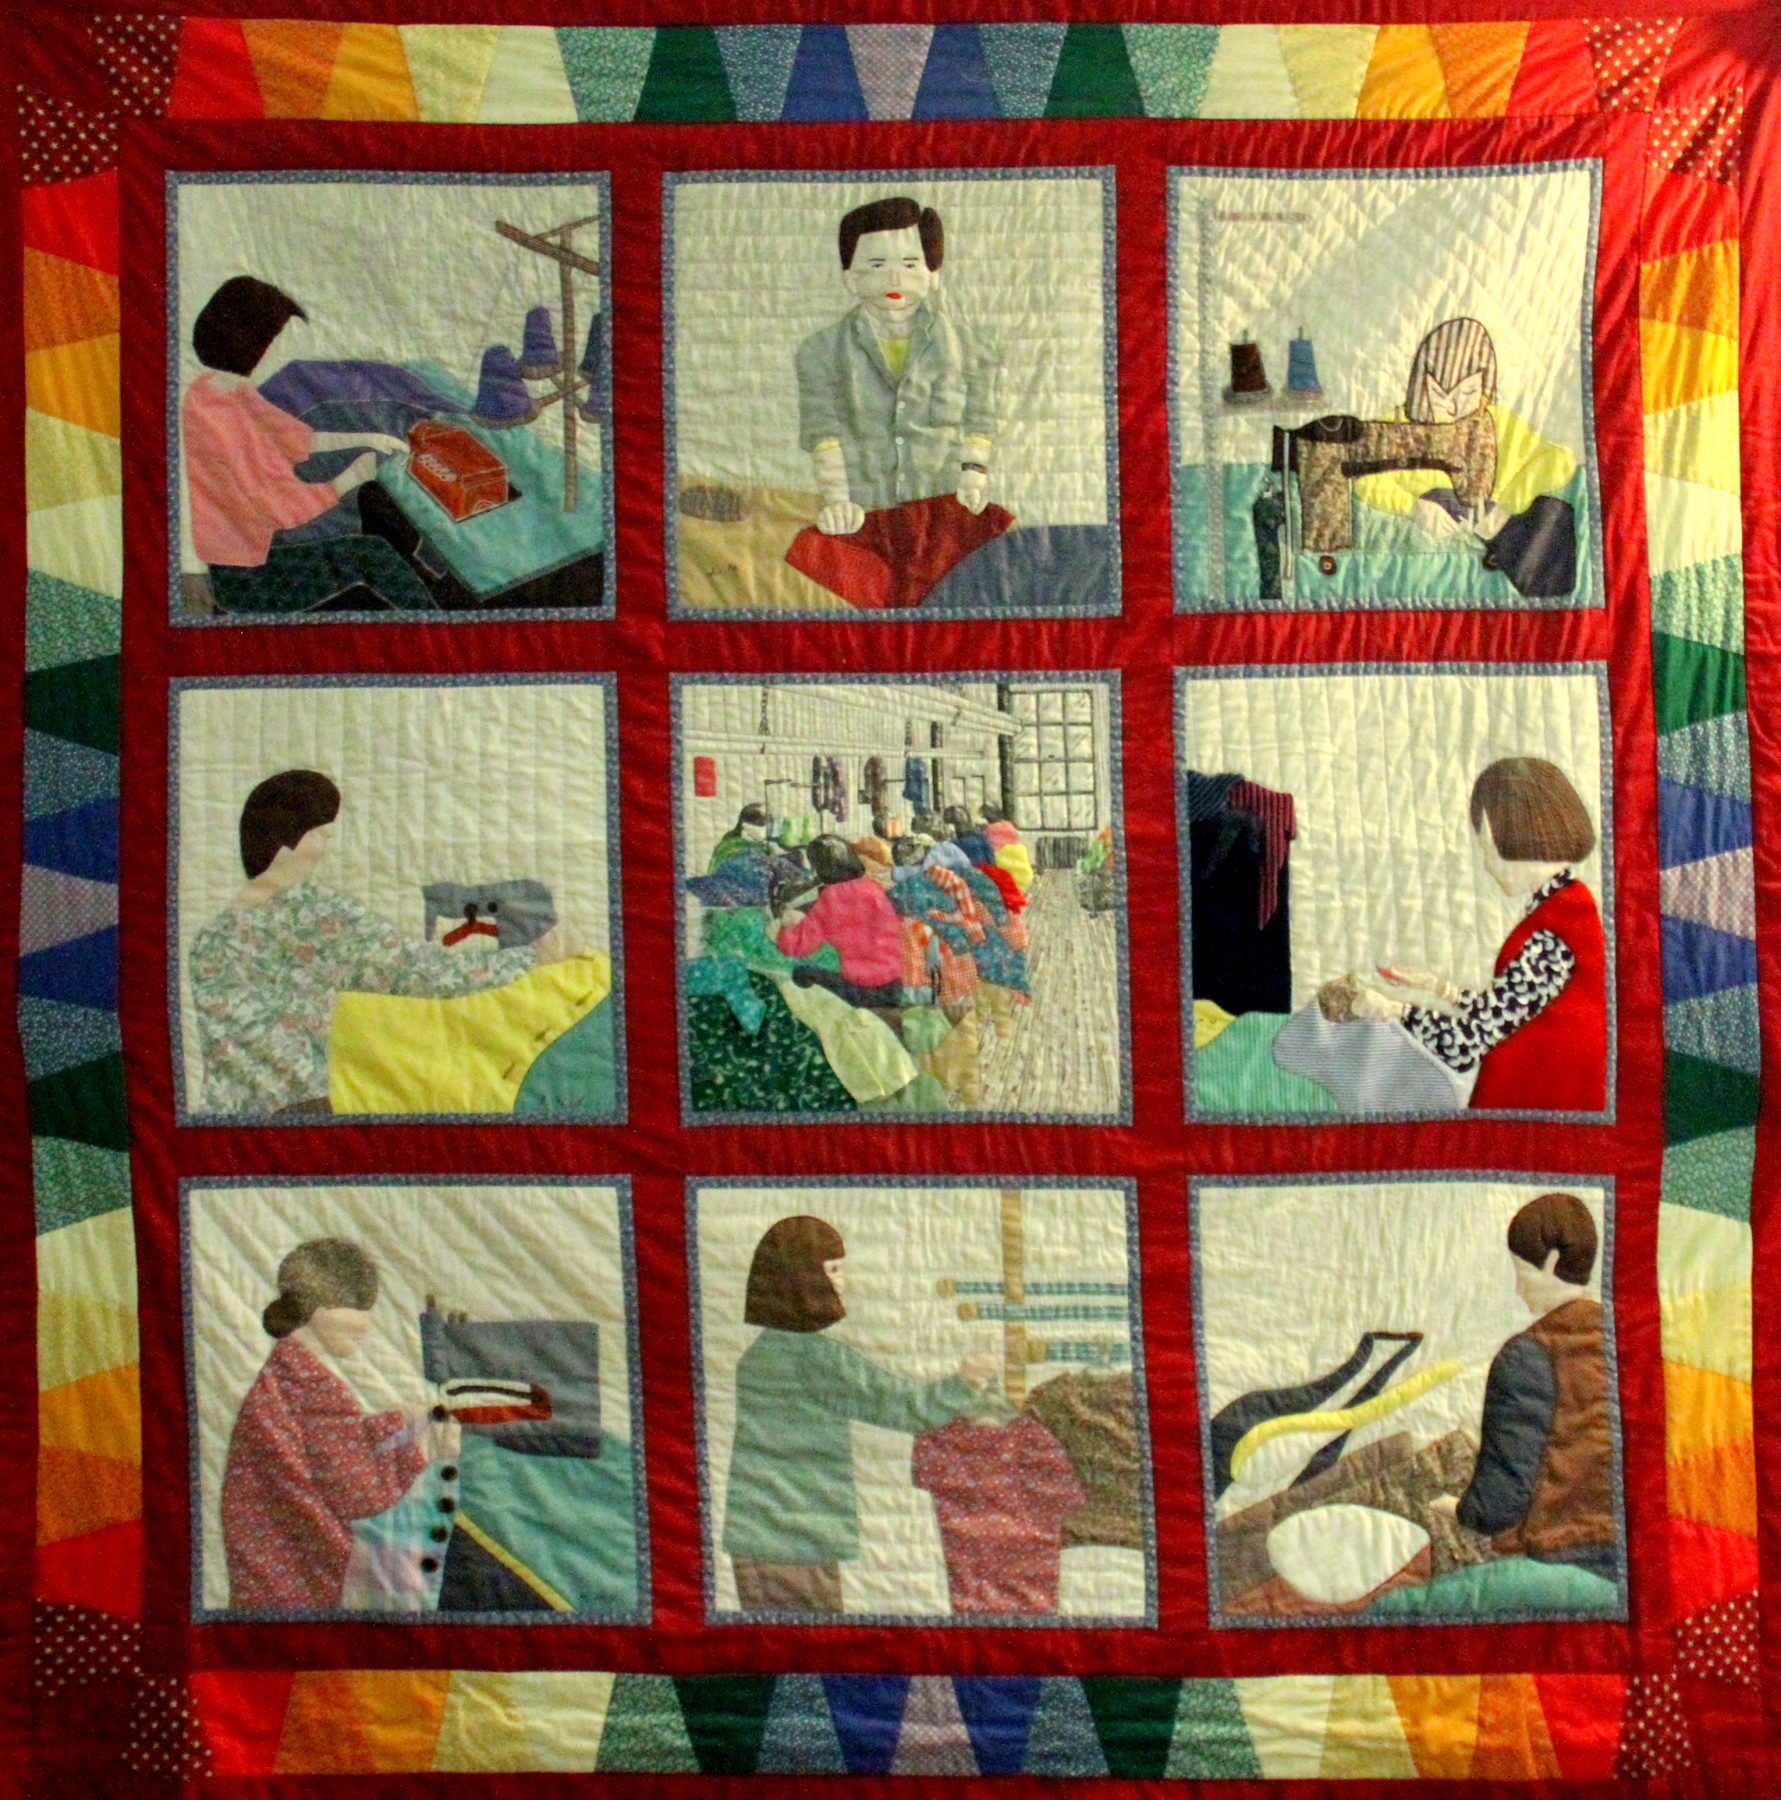 16 August 2019 Posted.
Quilt made by garment workers depicting garment work tasks, 1989, Museum of Chinese in America (MOCA) Collection.
由服装工人制作的被子，描绘了服装工作的各项任务分工，1989年，美国华人博物馆（MOCA）馆藏